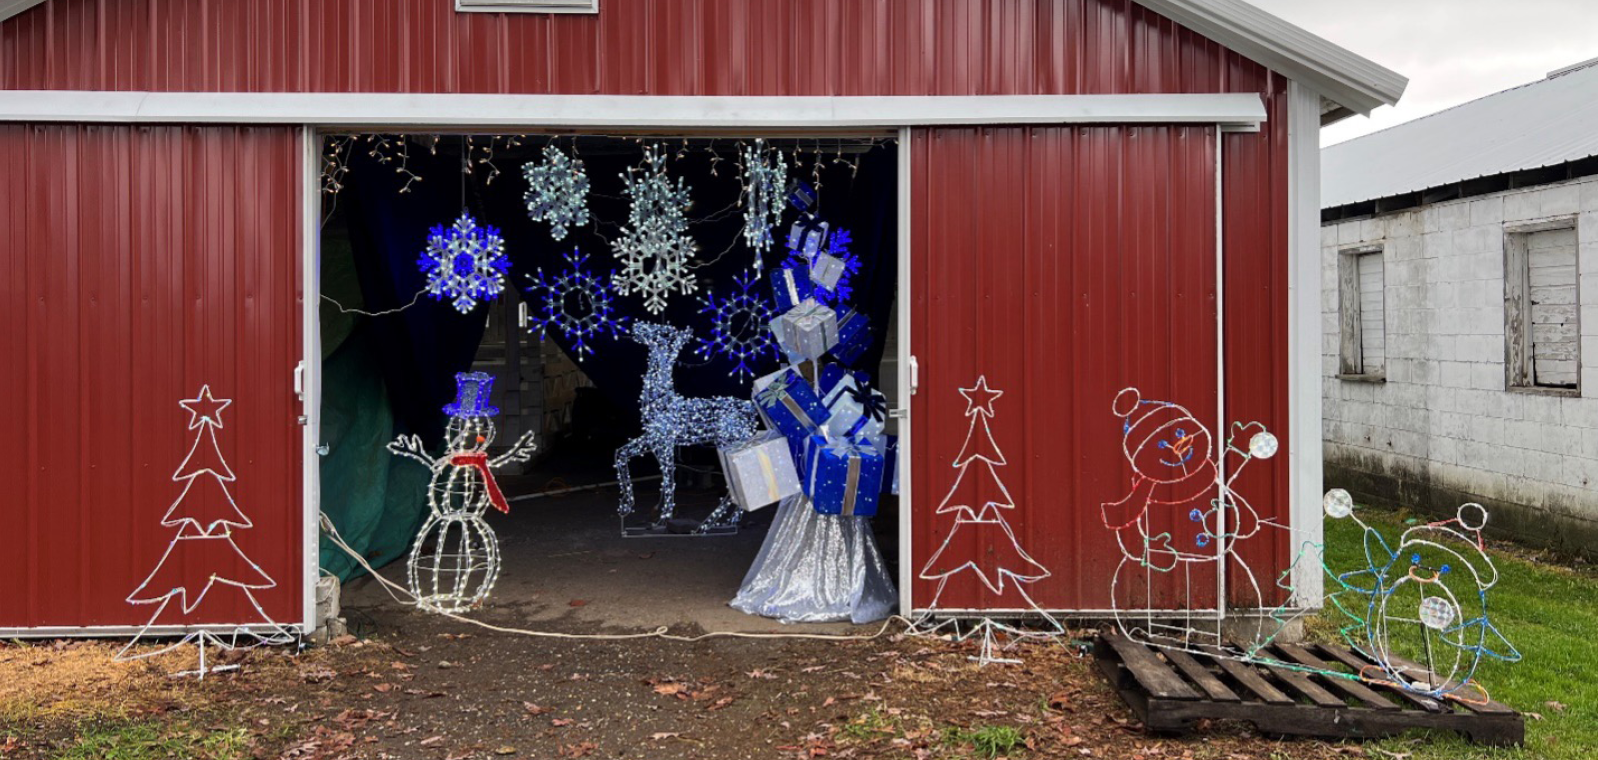 Christmas lights decorated around the barn